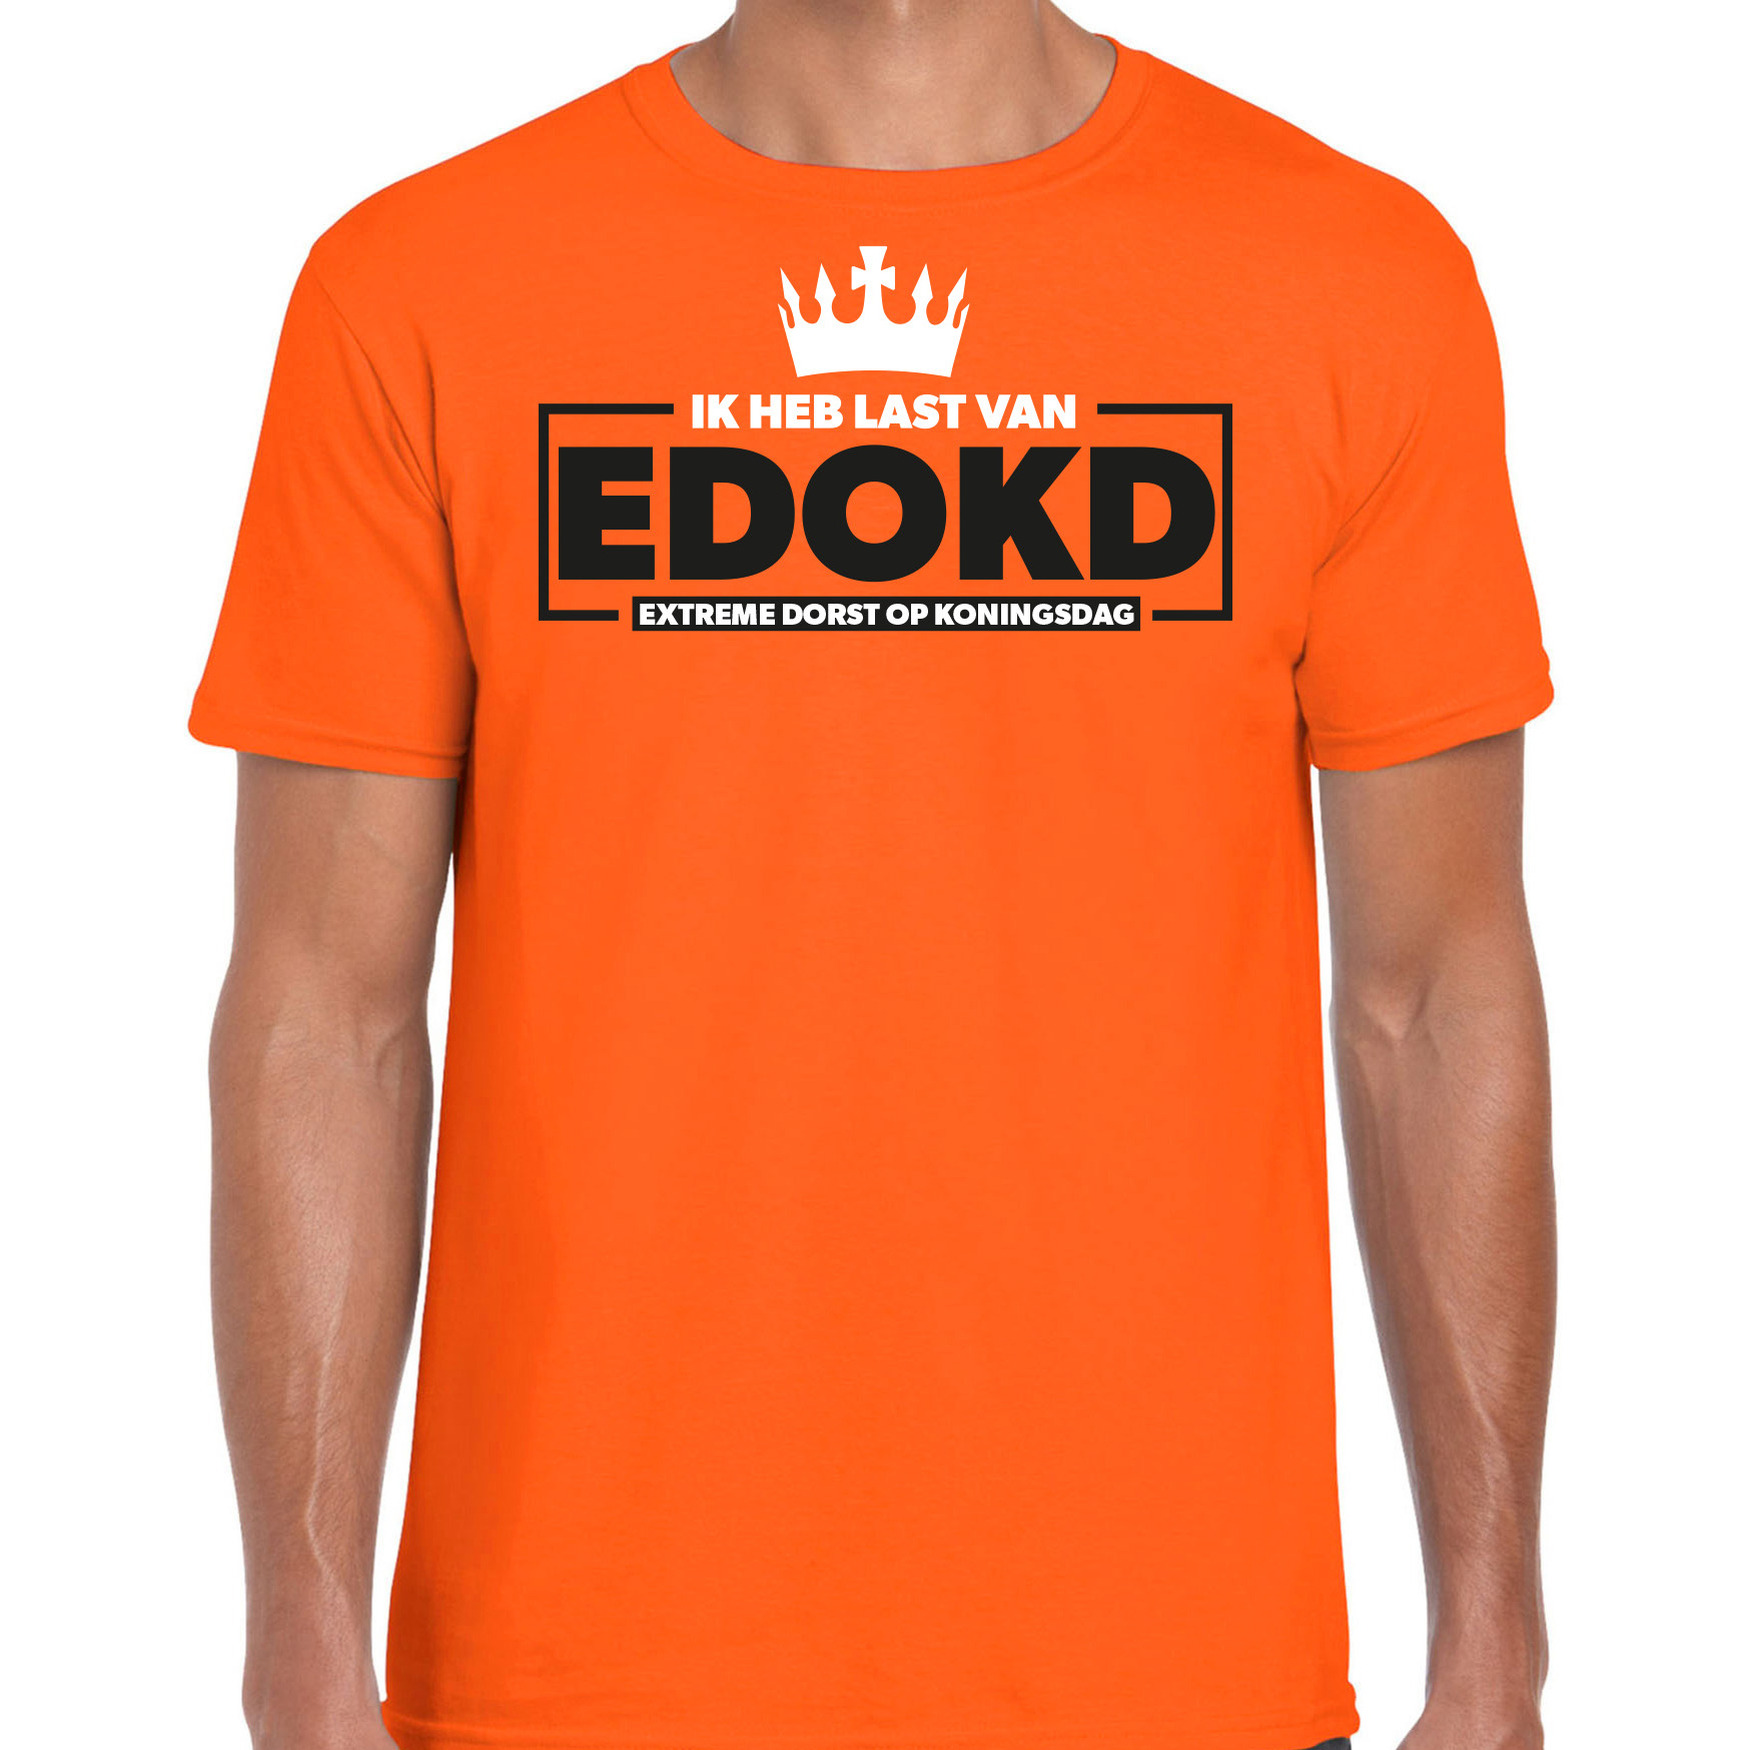 Koningsdag verkleed T-shirt voor heren extreme dorst op koningsdag oranje feestkleding